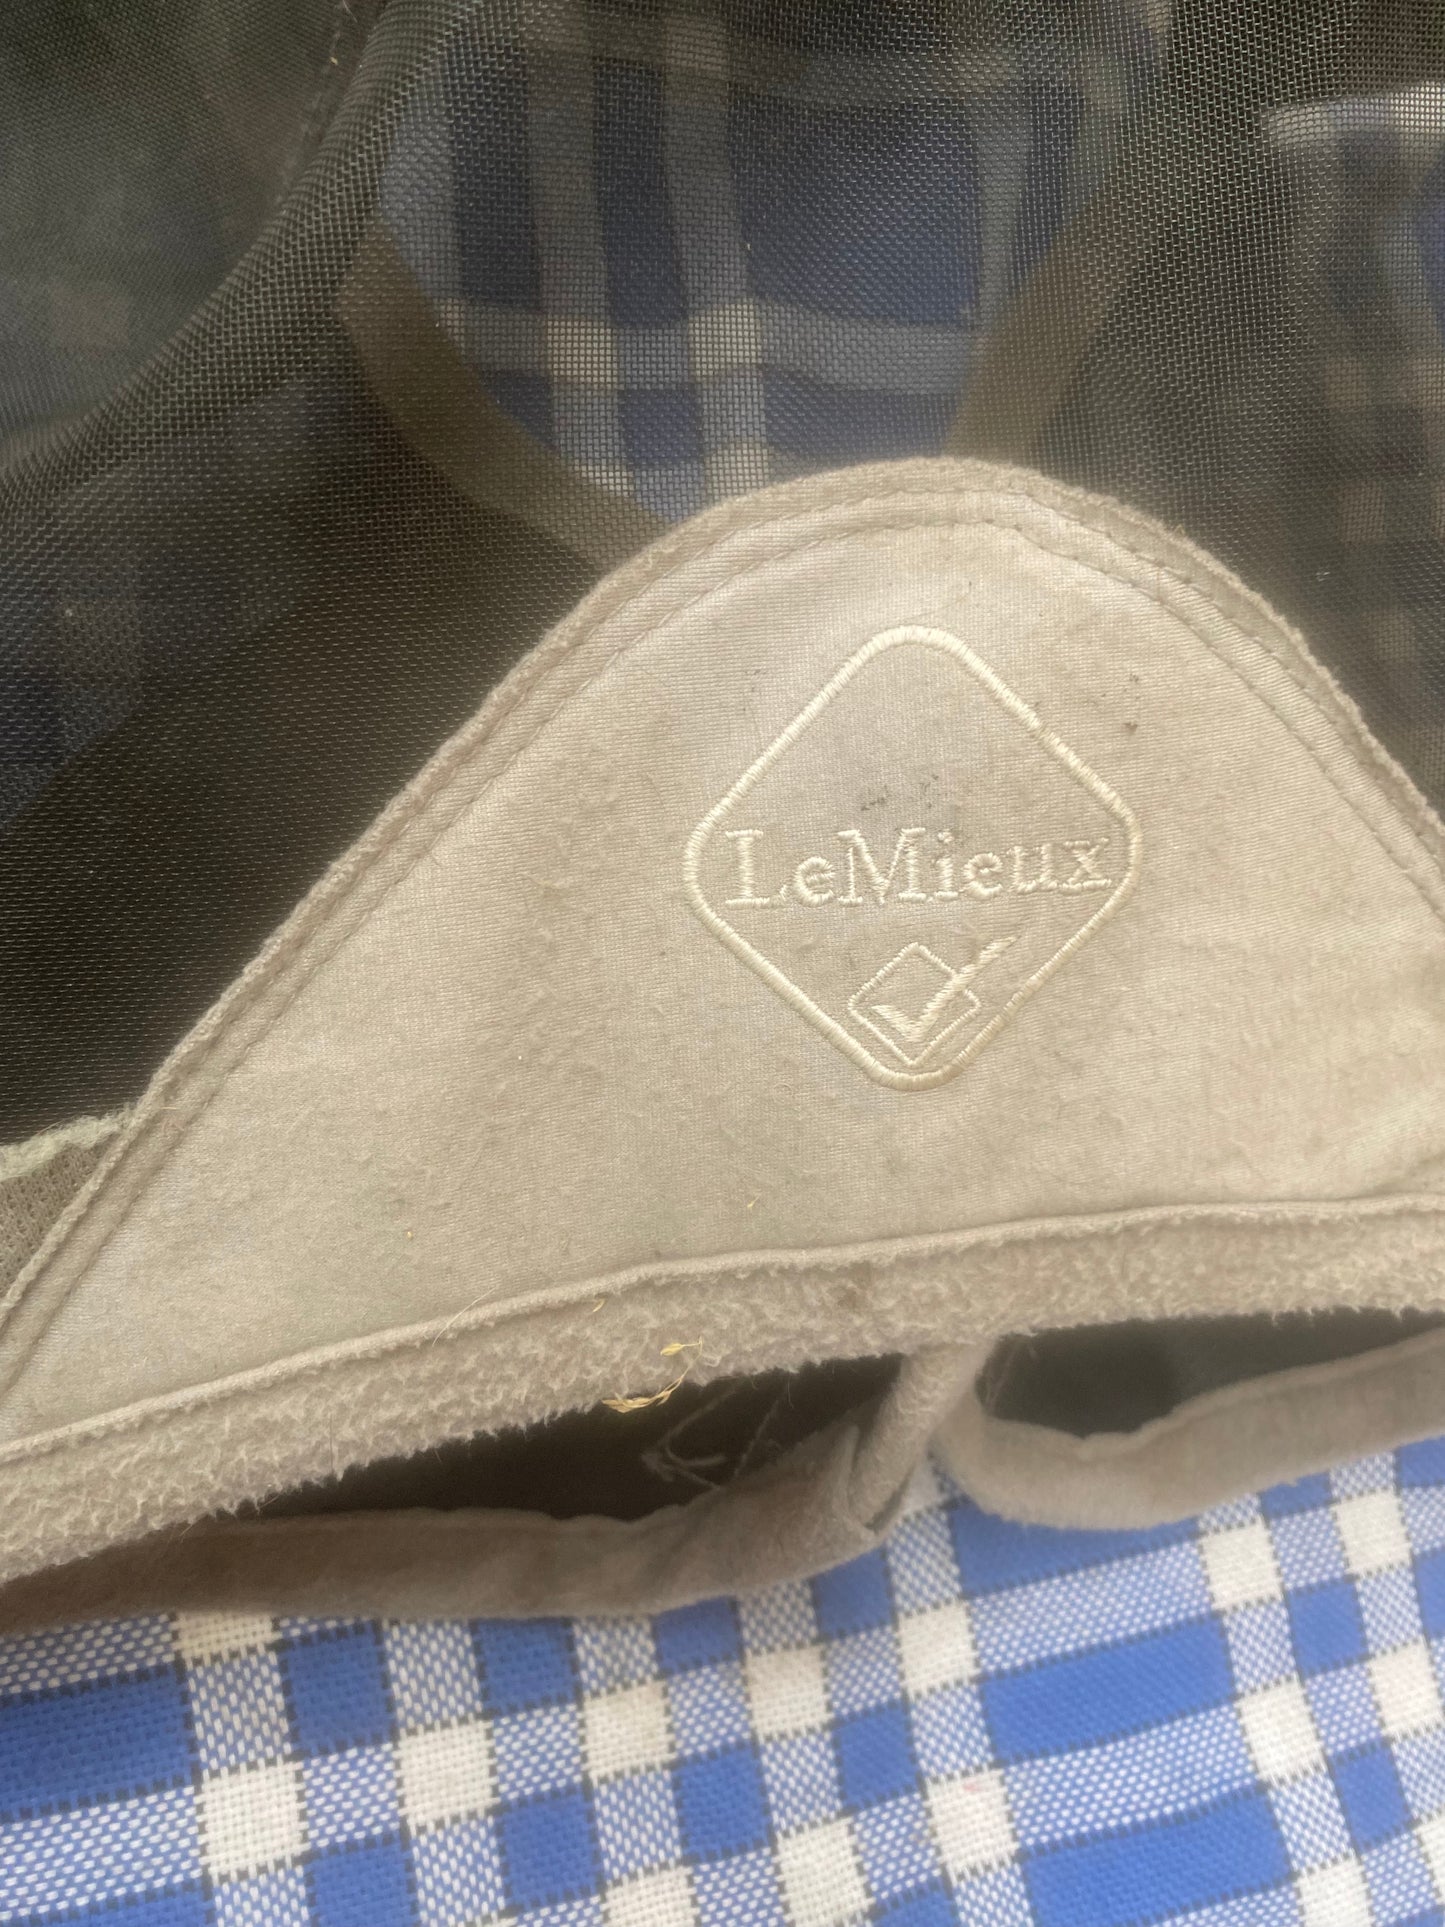 Lemieux comfort shield full size fly mask FREE POSTAGE🟢